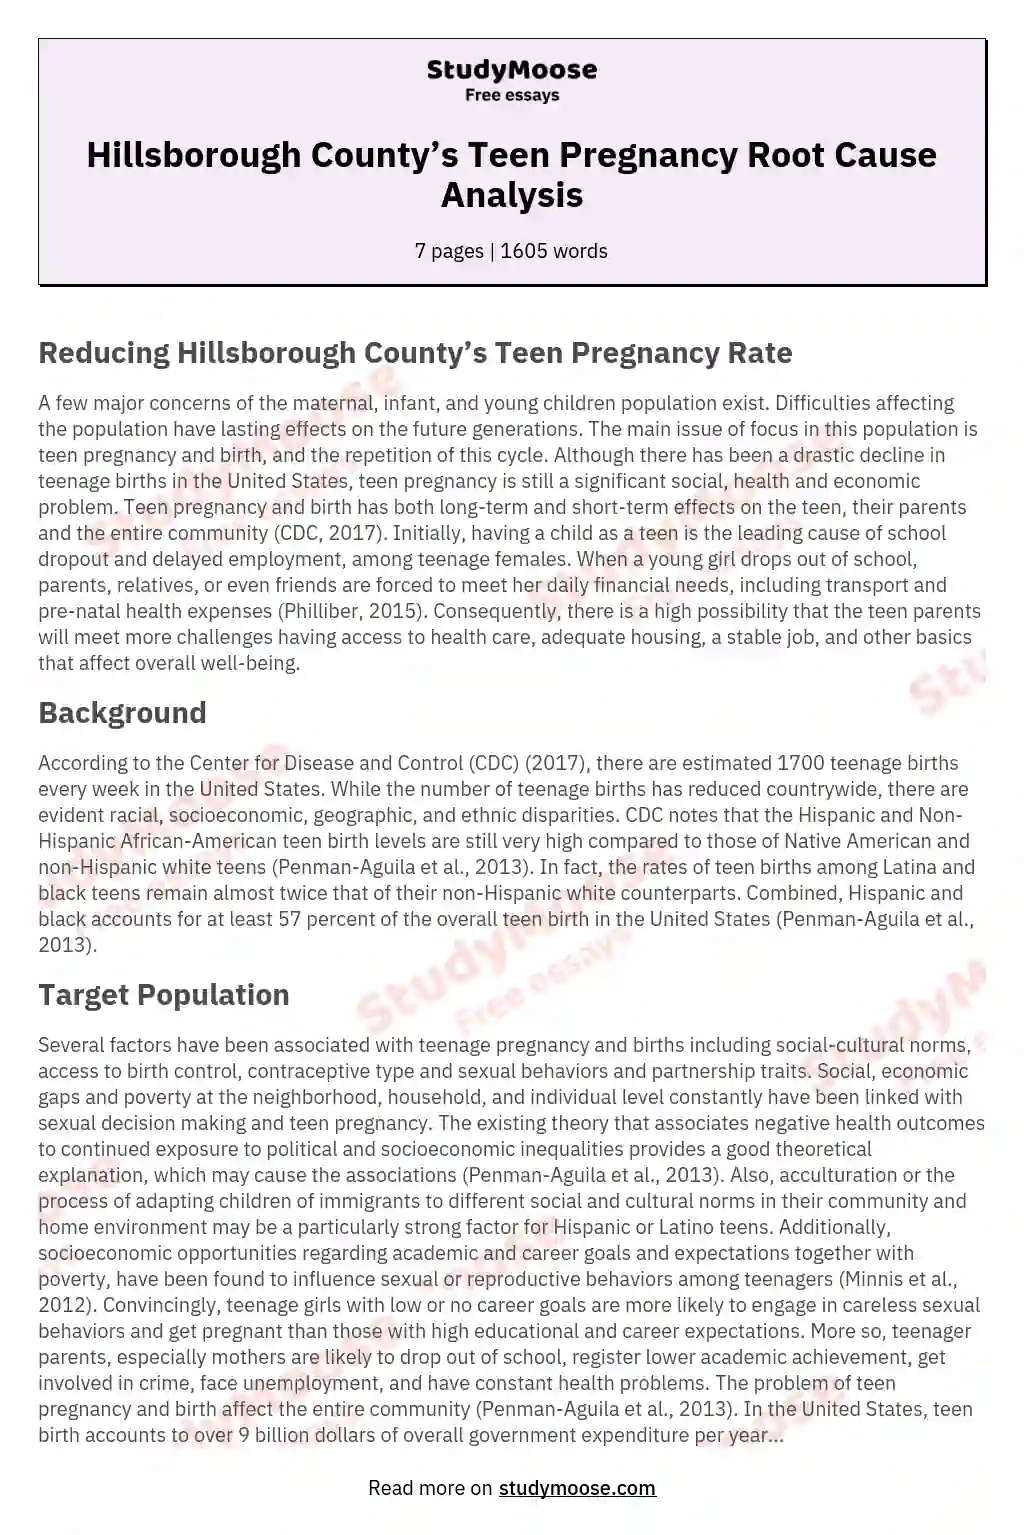 Hillsborough County’s Teen Pregnancy Root Cause Analysis essay